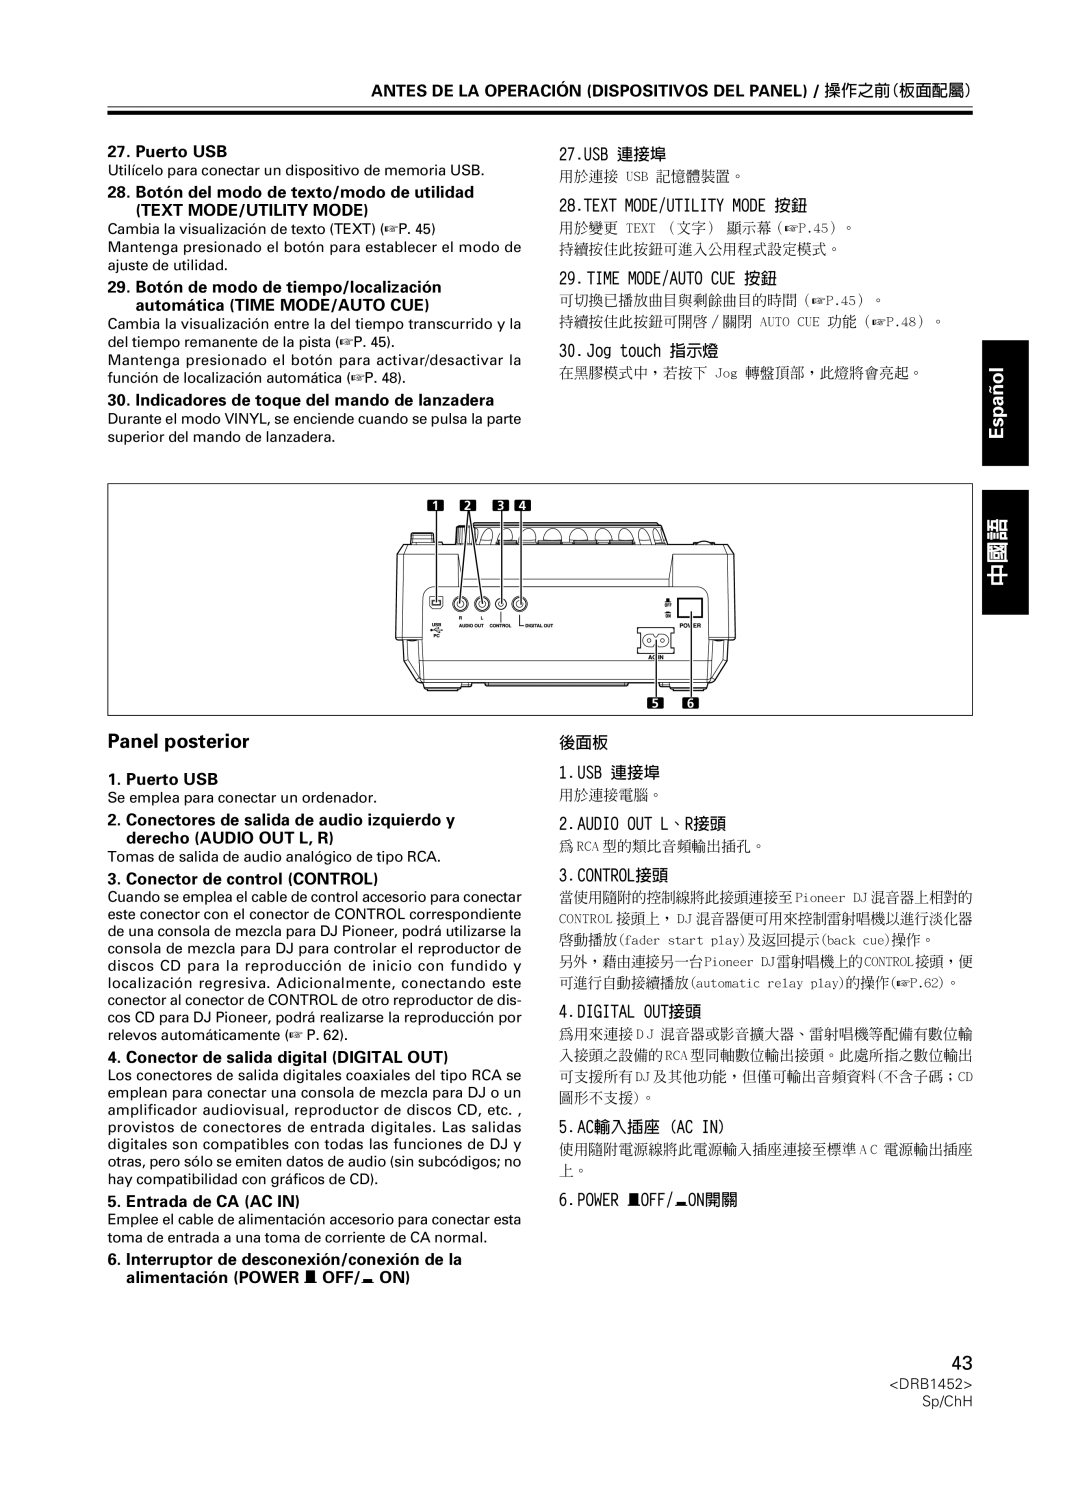 Pioneer CDJ-400 Panel posterior, Puerto USB, Botón del modo de texto/modo de utilidad, Text Mode/Utility Mode, Usb 連接埠 